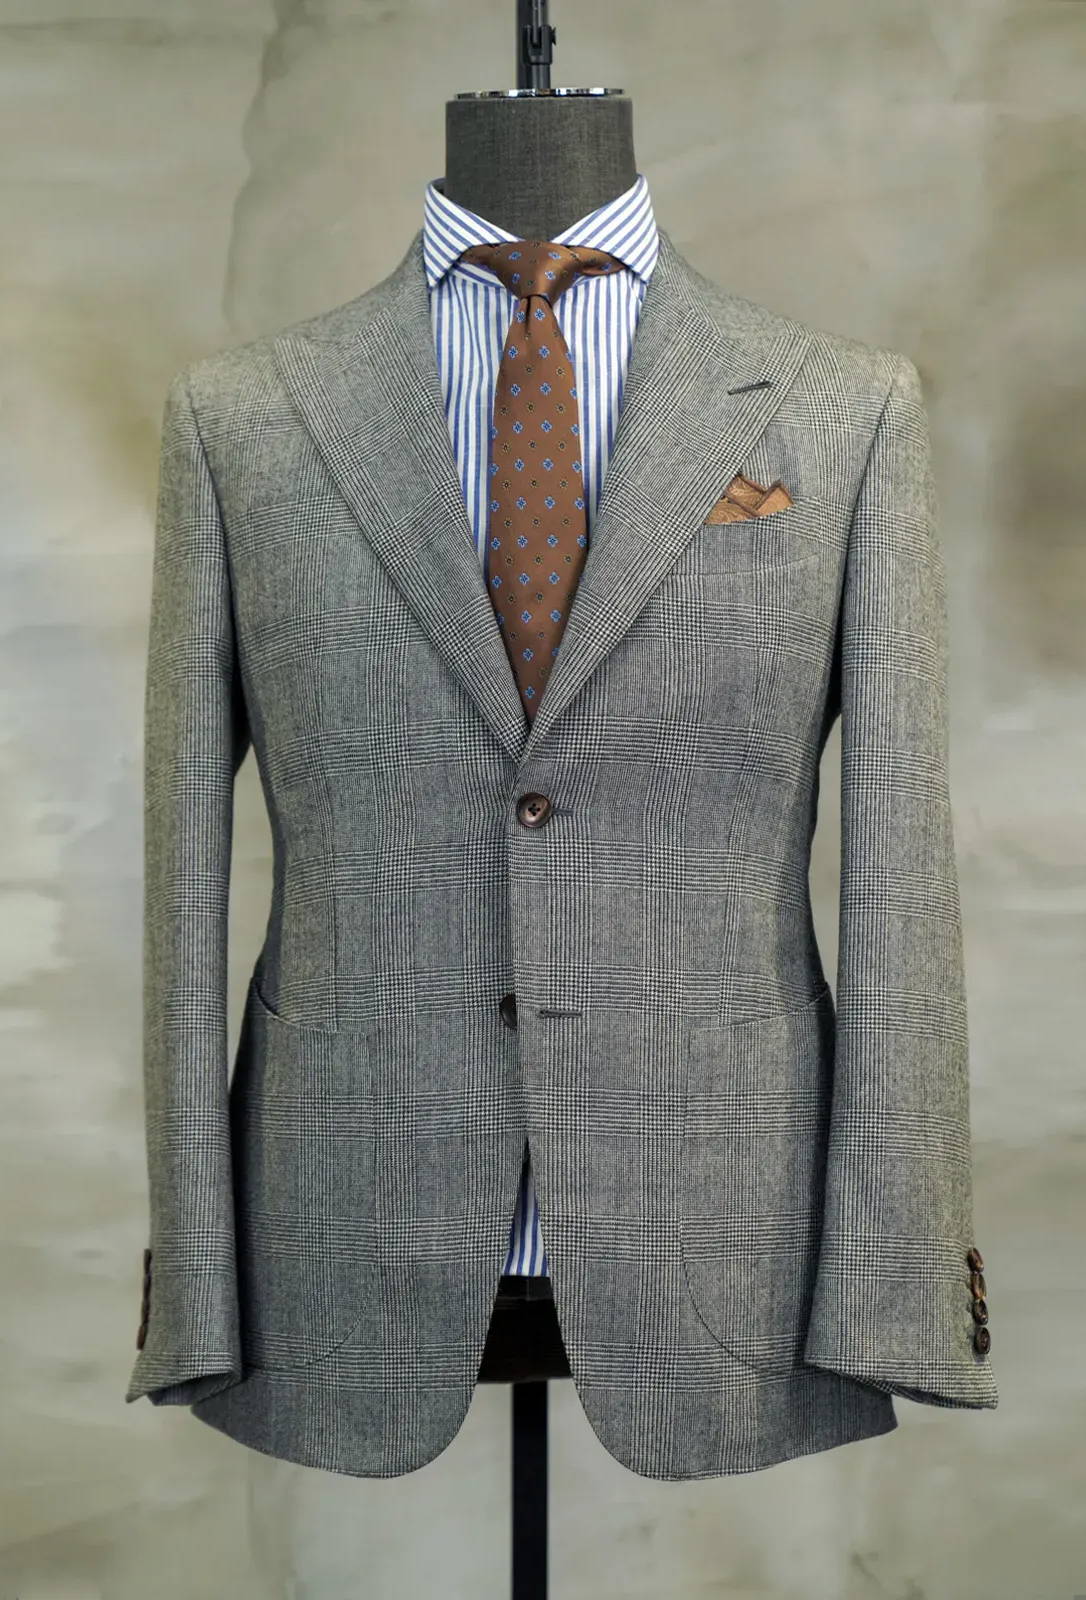 A Hand Tailored Suit - Cutting Custom Bespoke Hand Made Garments